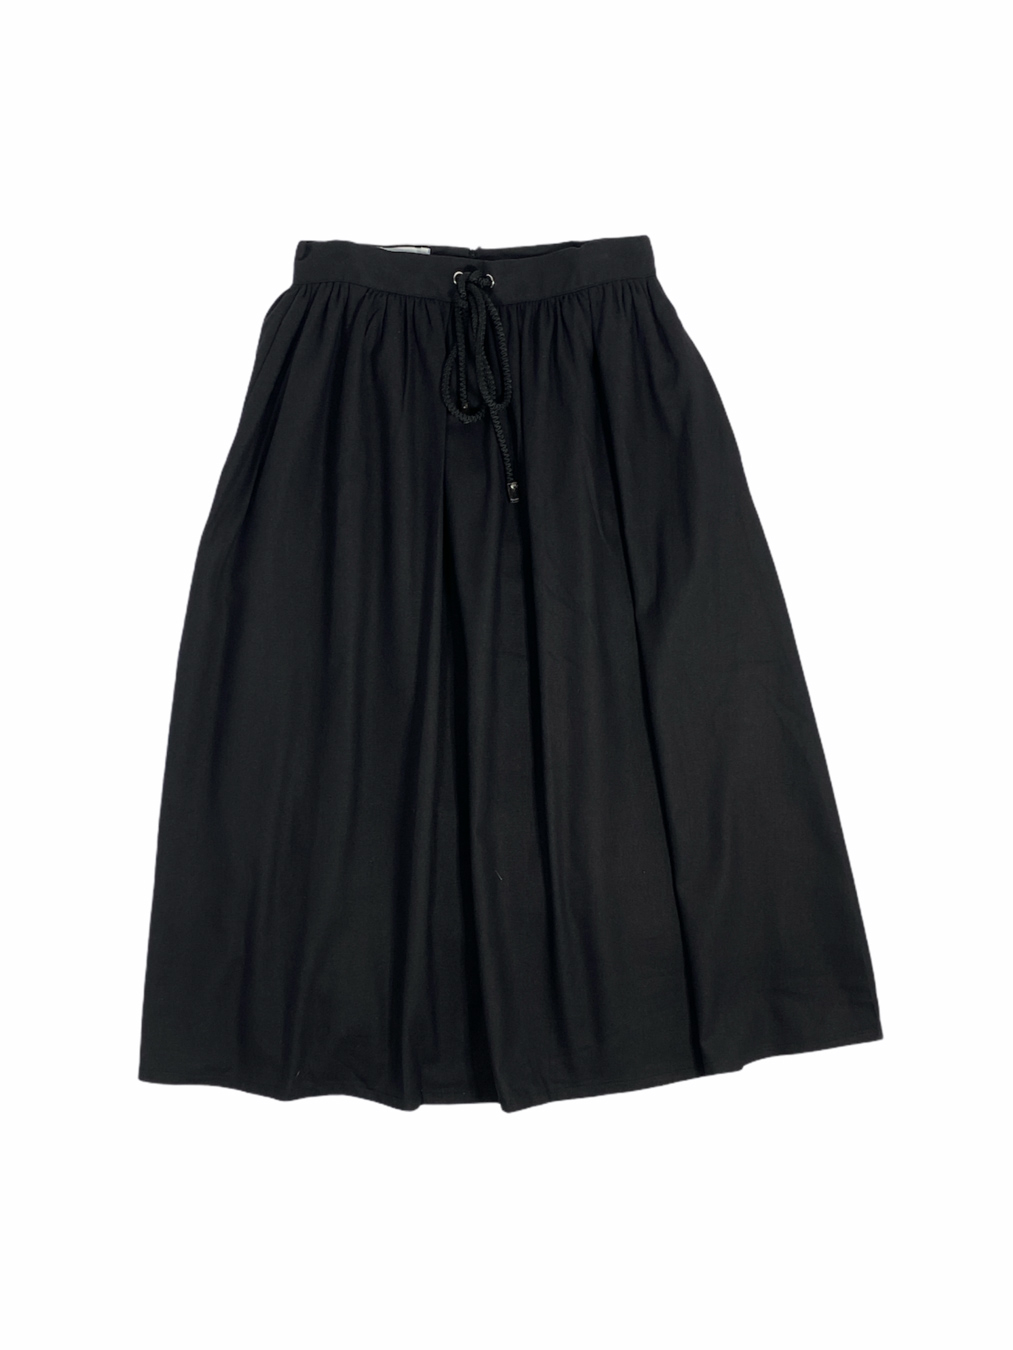 Midori Skirt (Black)